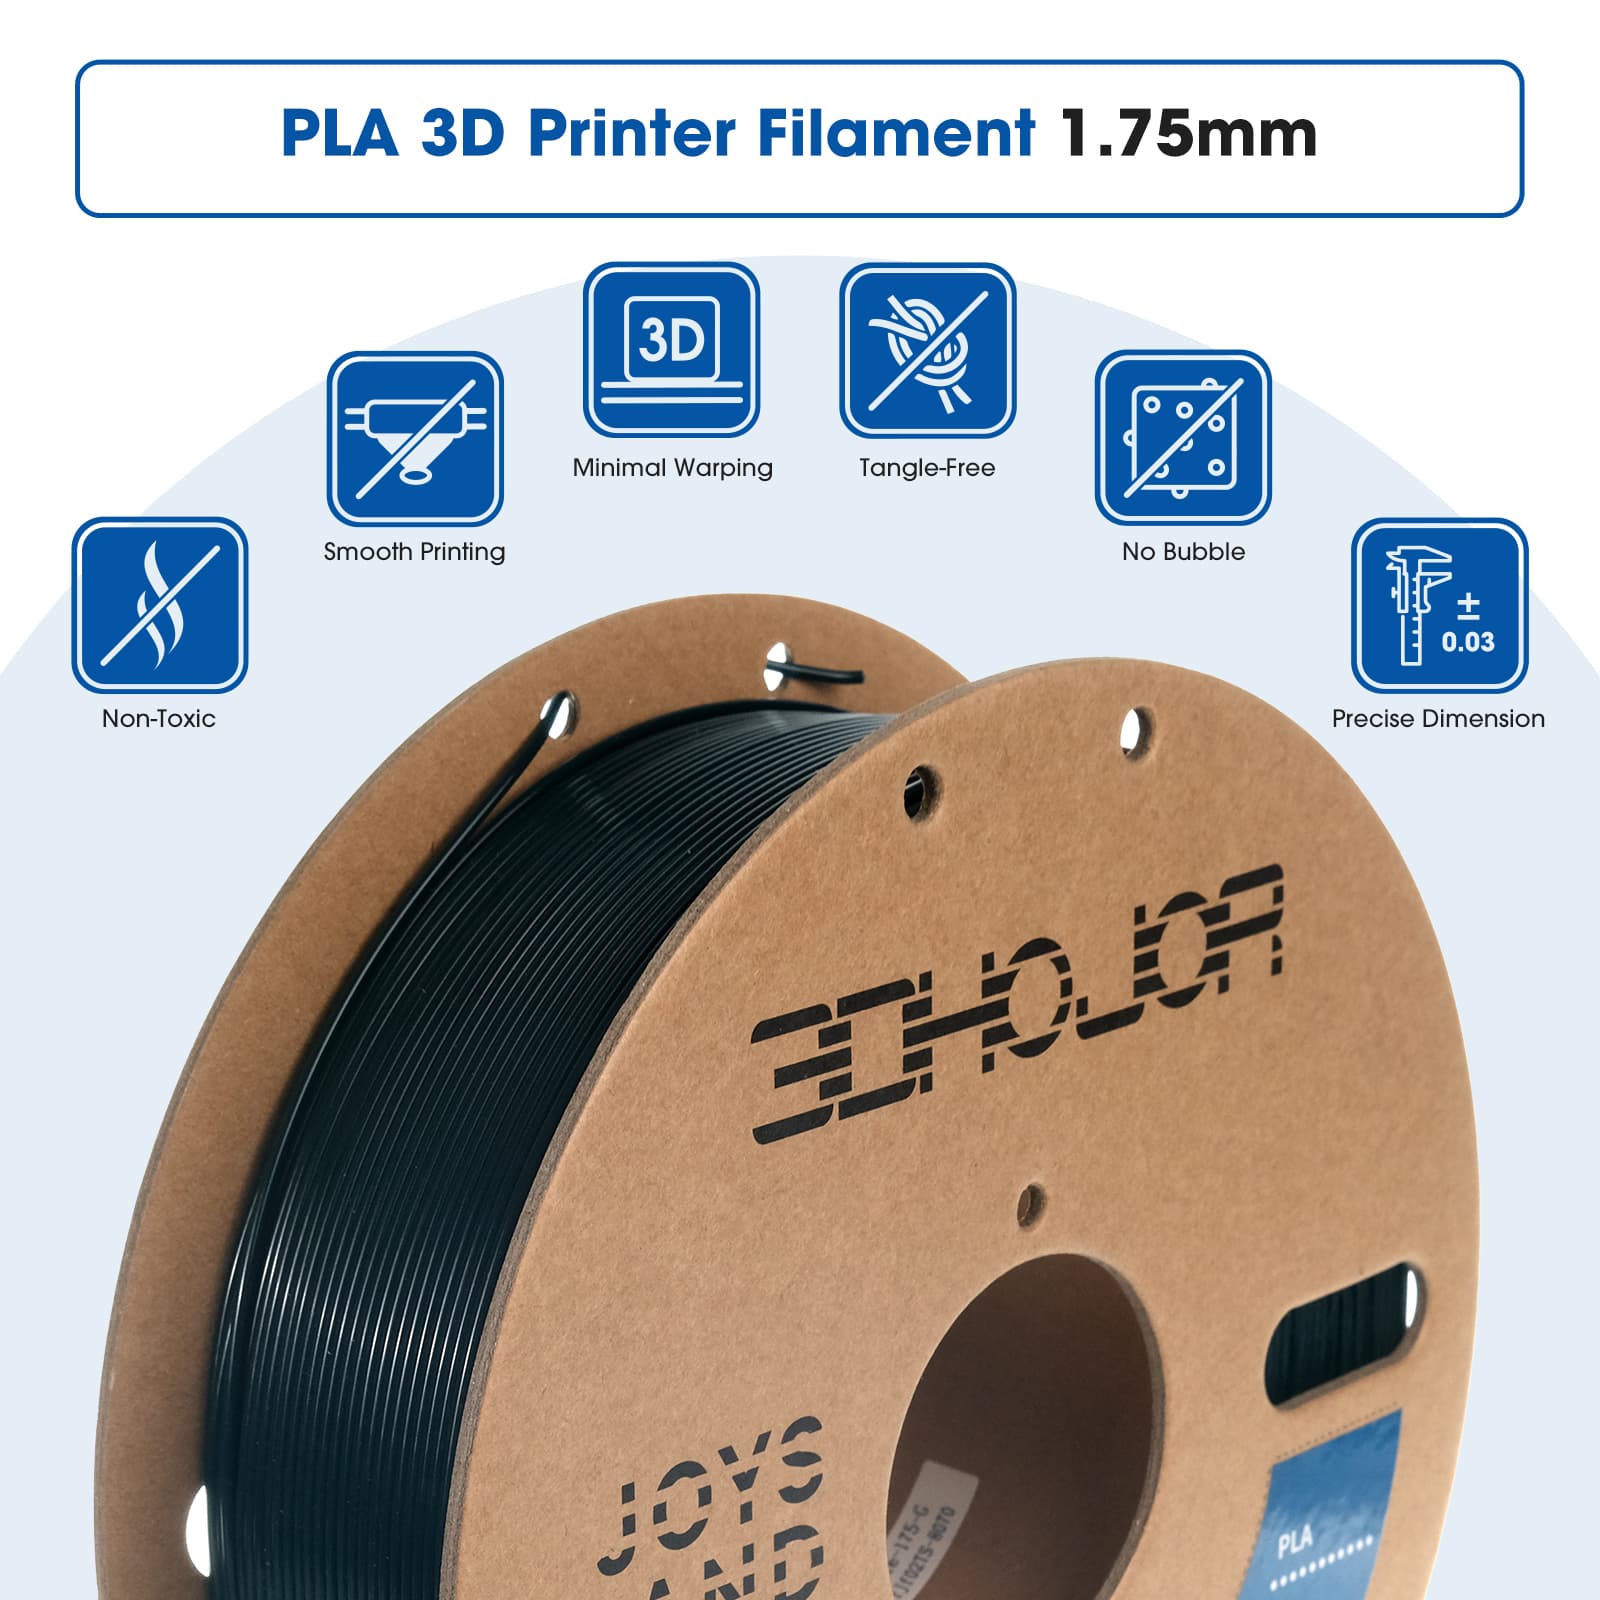 3DHoJor PLA Filament 1.75mm,3D Printer Filament,1kg Cardboard Spool (2.2lbs),Dimensional Accuracy +/- 0.03 mm, Fit Most 3D FDM Printer,Green